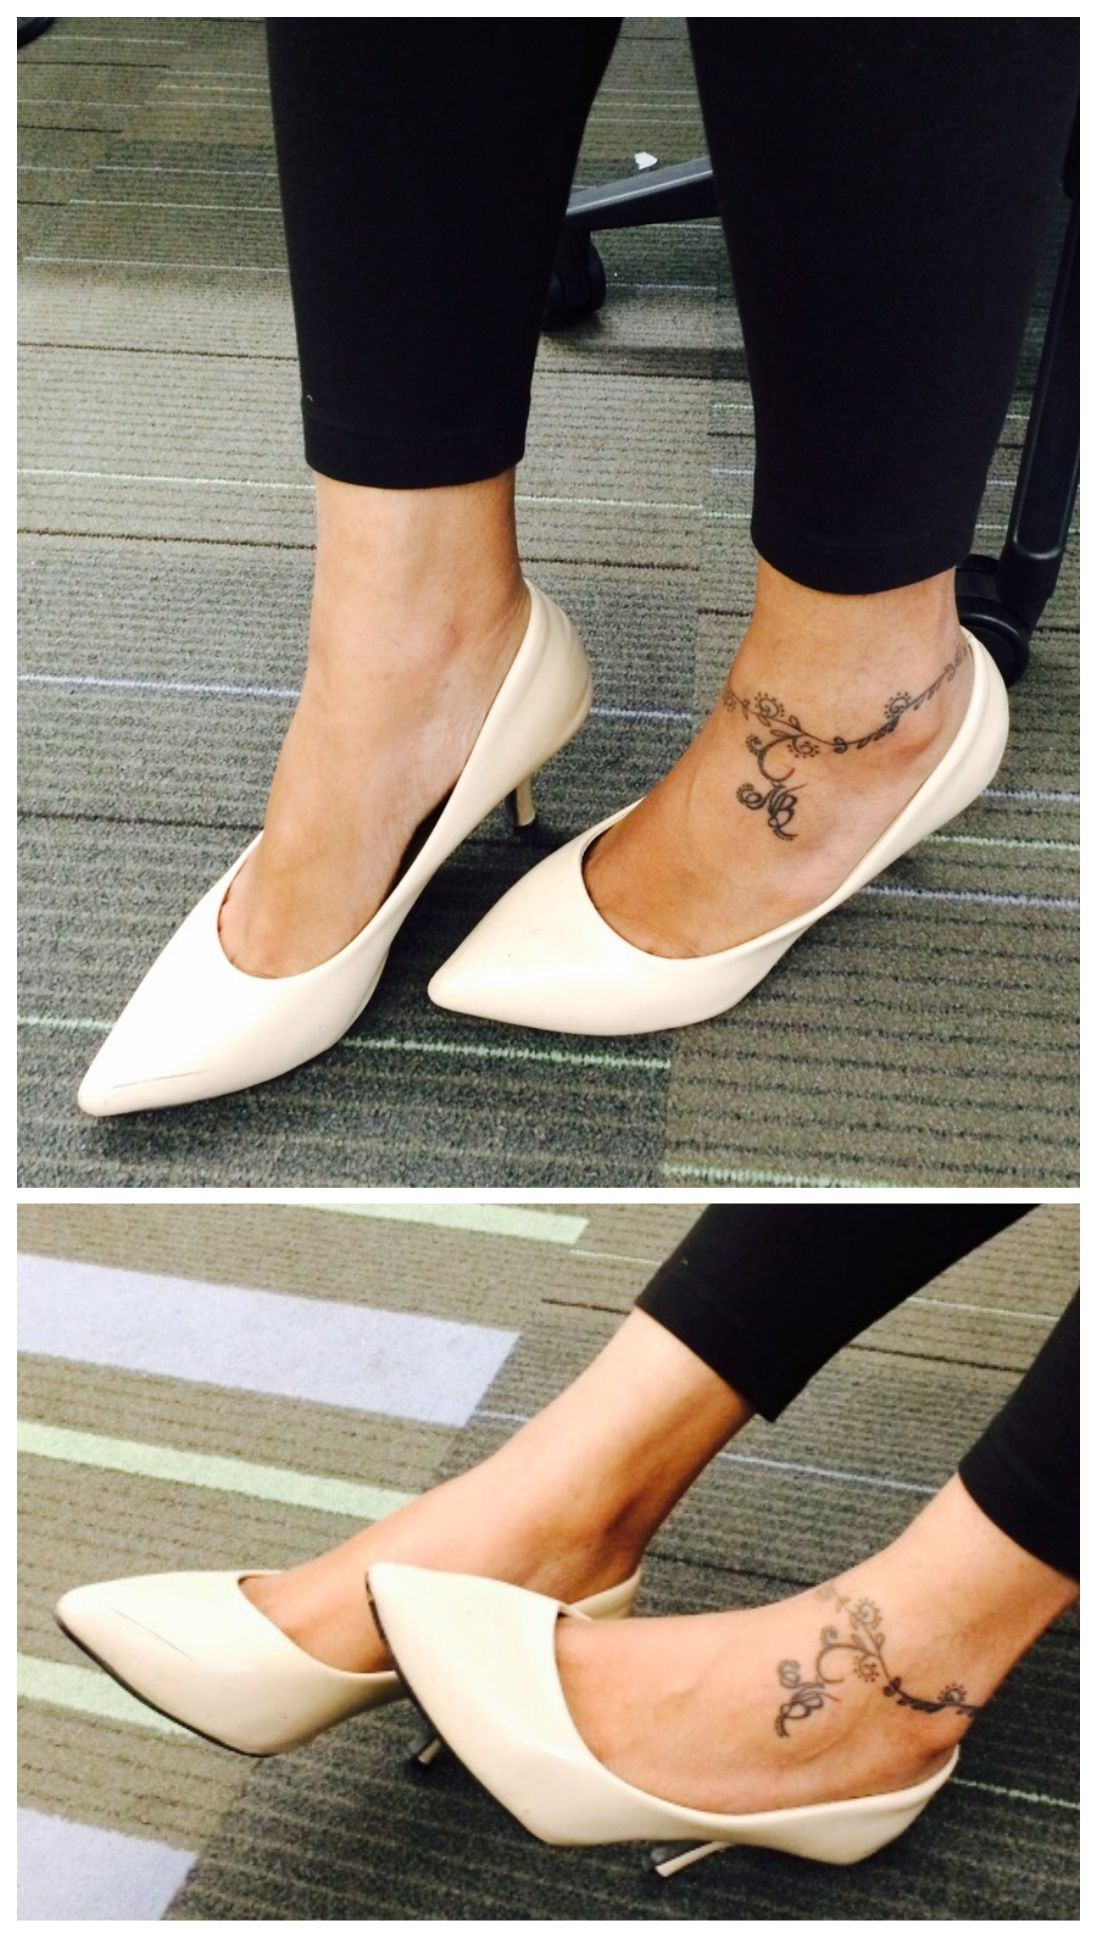 Deepika Padukone Inspired Foot Tattoo With Nb Initials Random throughout dimensions 1097 X 1938